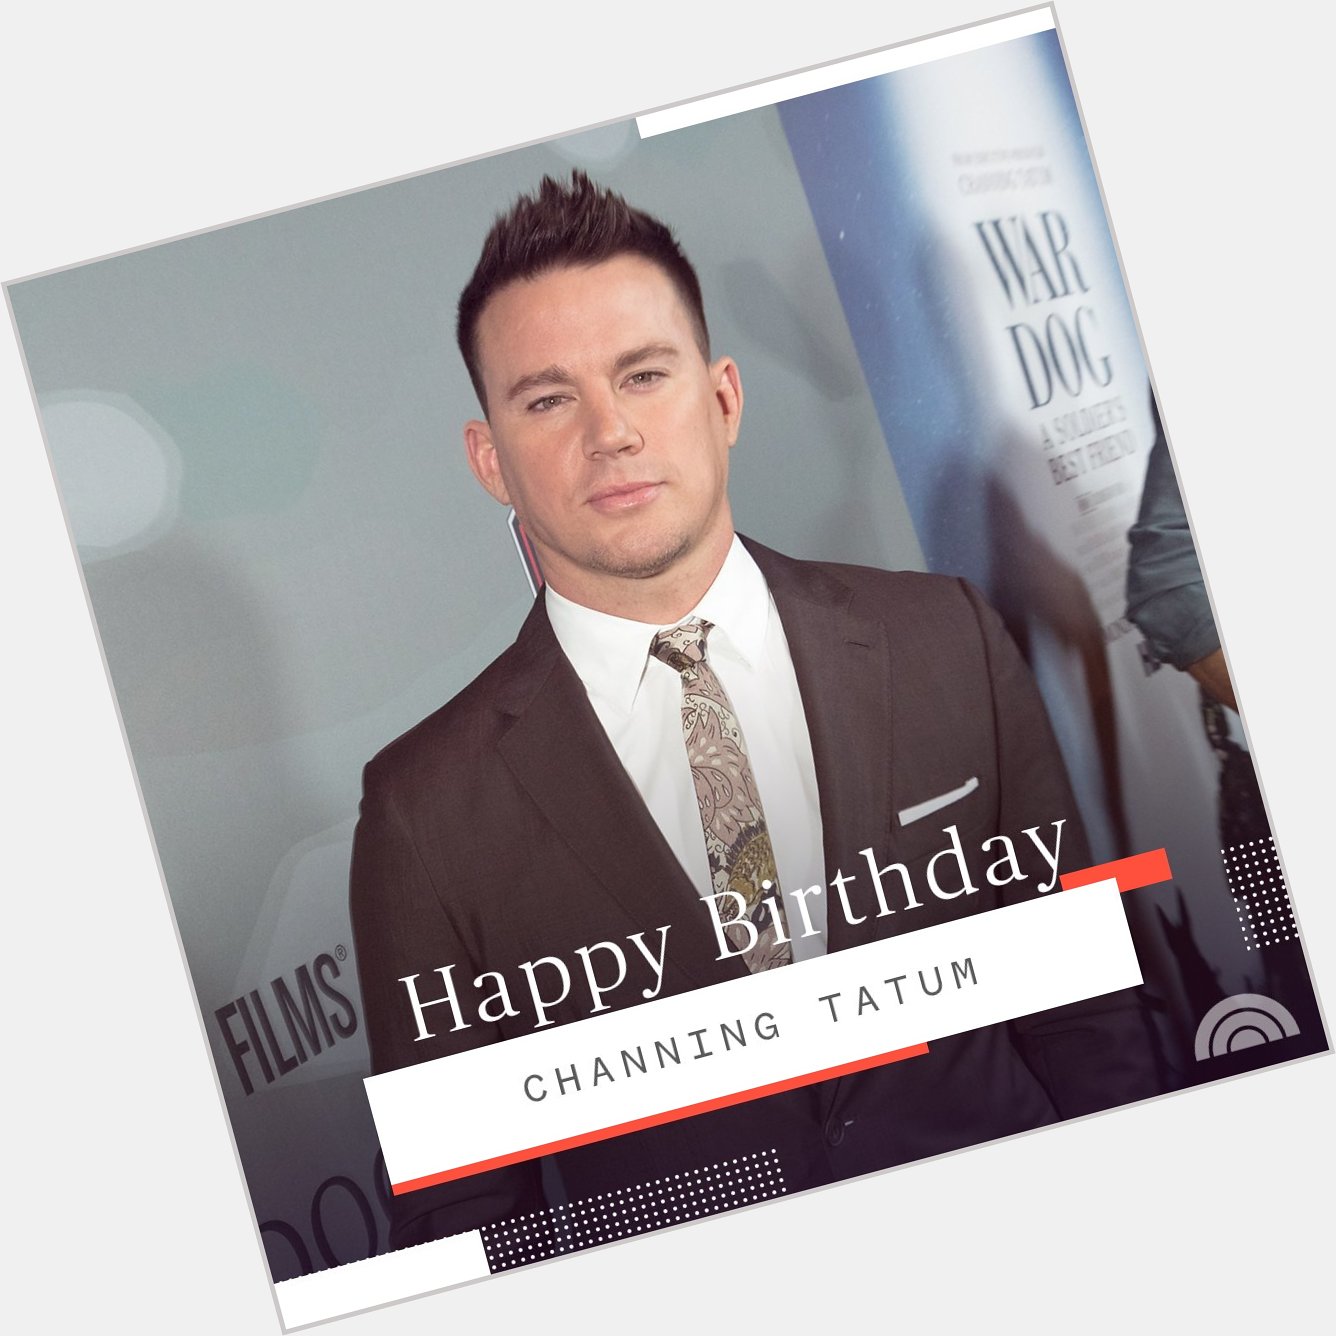 Happy birthday, Channing Tatum!  